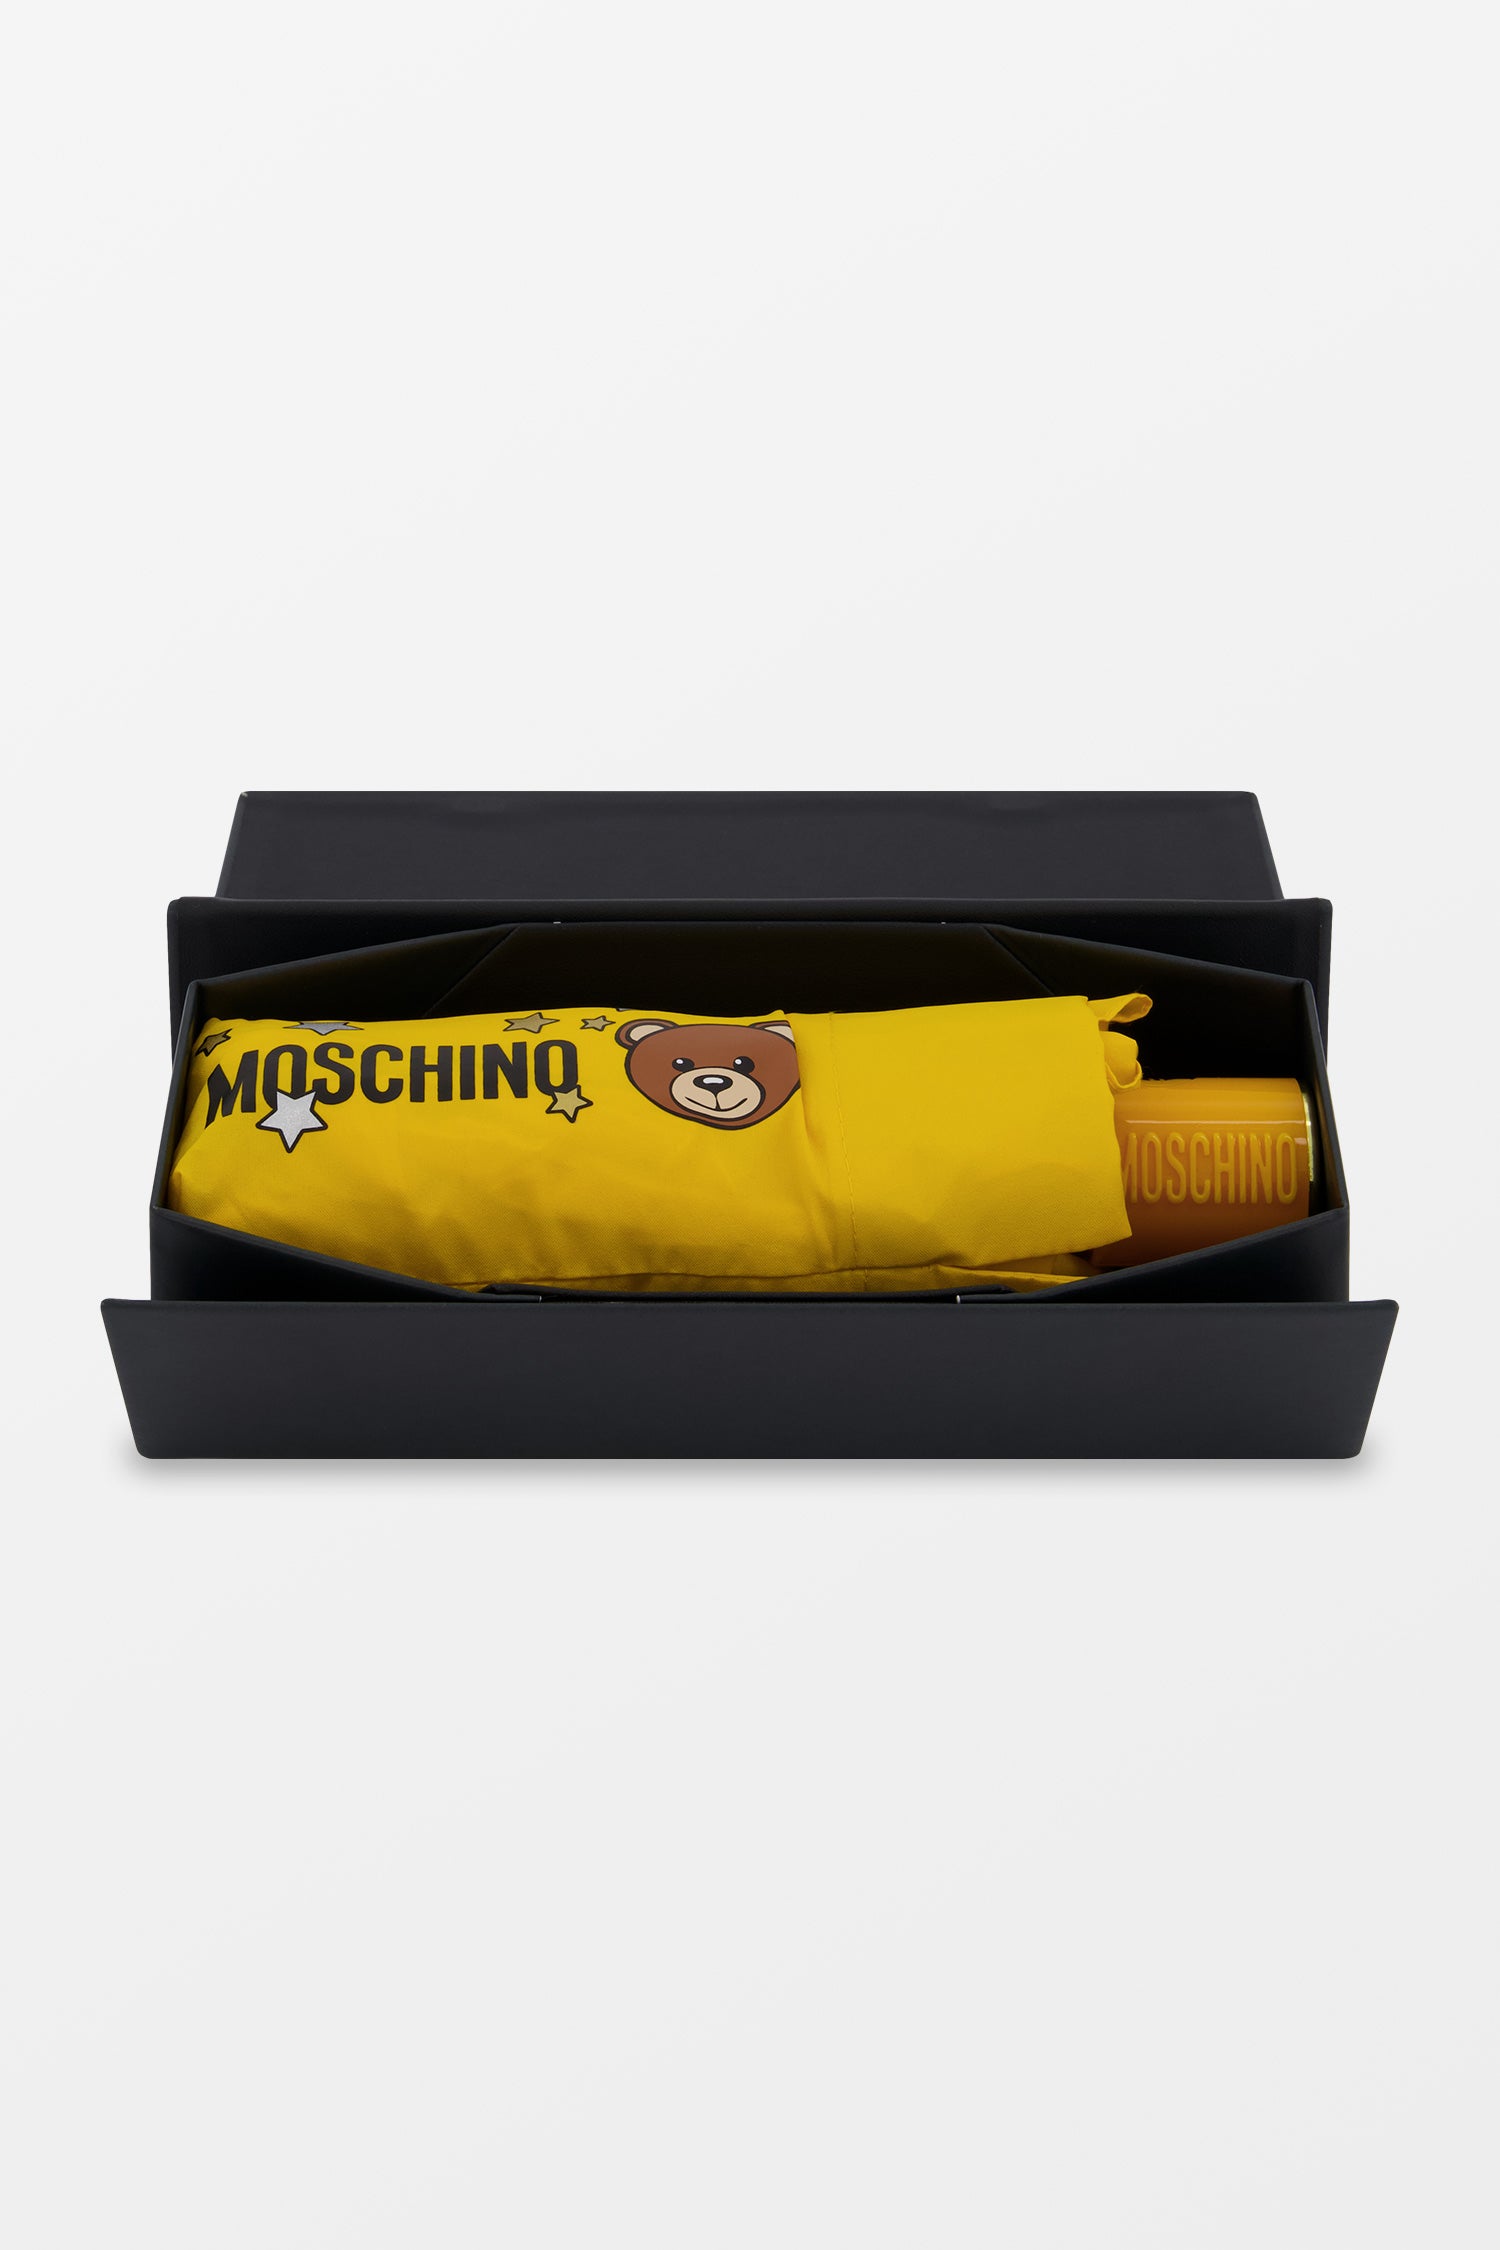 Moschino Toy Stars Compact Yellow